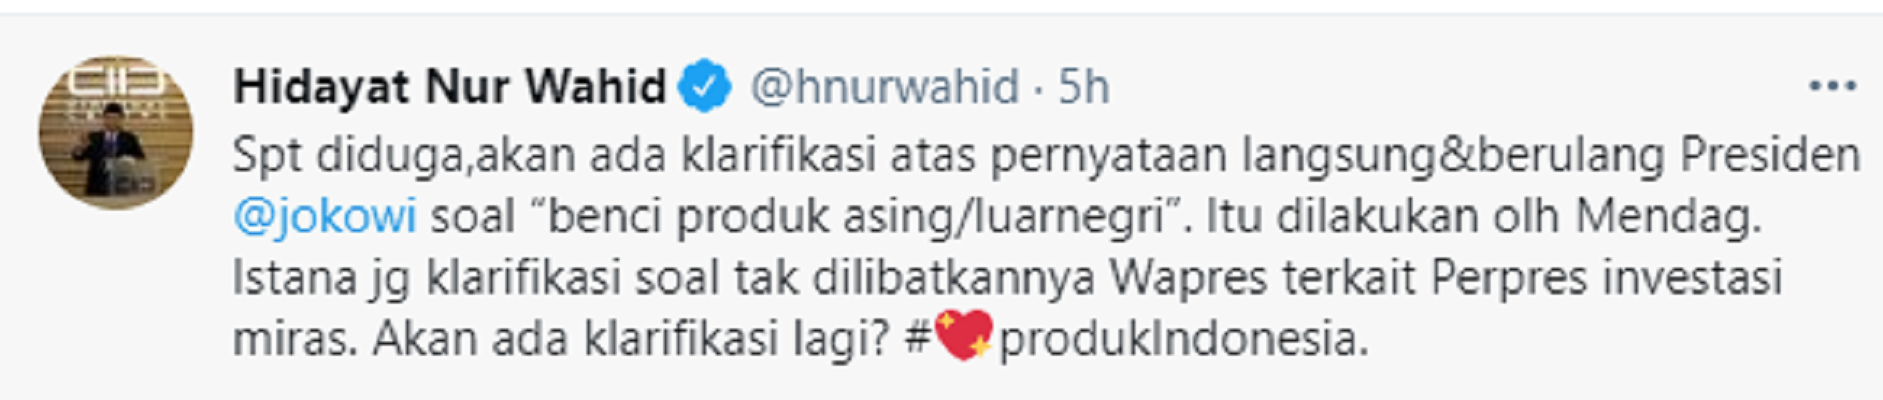 Cuitan Hidayat Nur Wahid soal klarifikasi Istana terkait ajakan Jokowi benci produk asing.